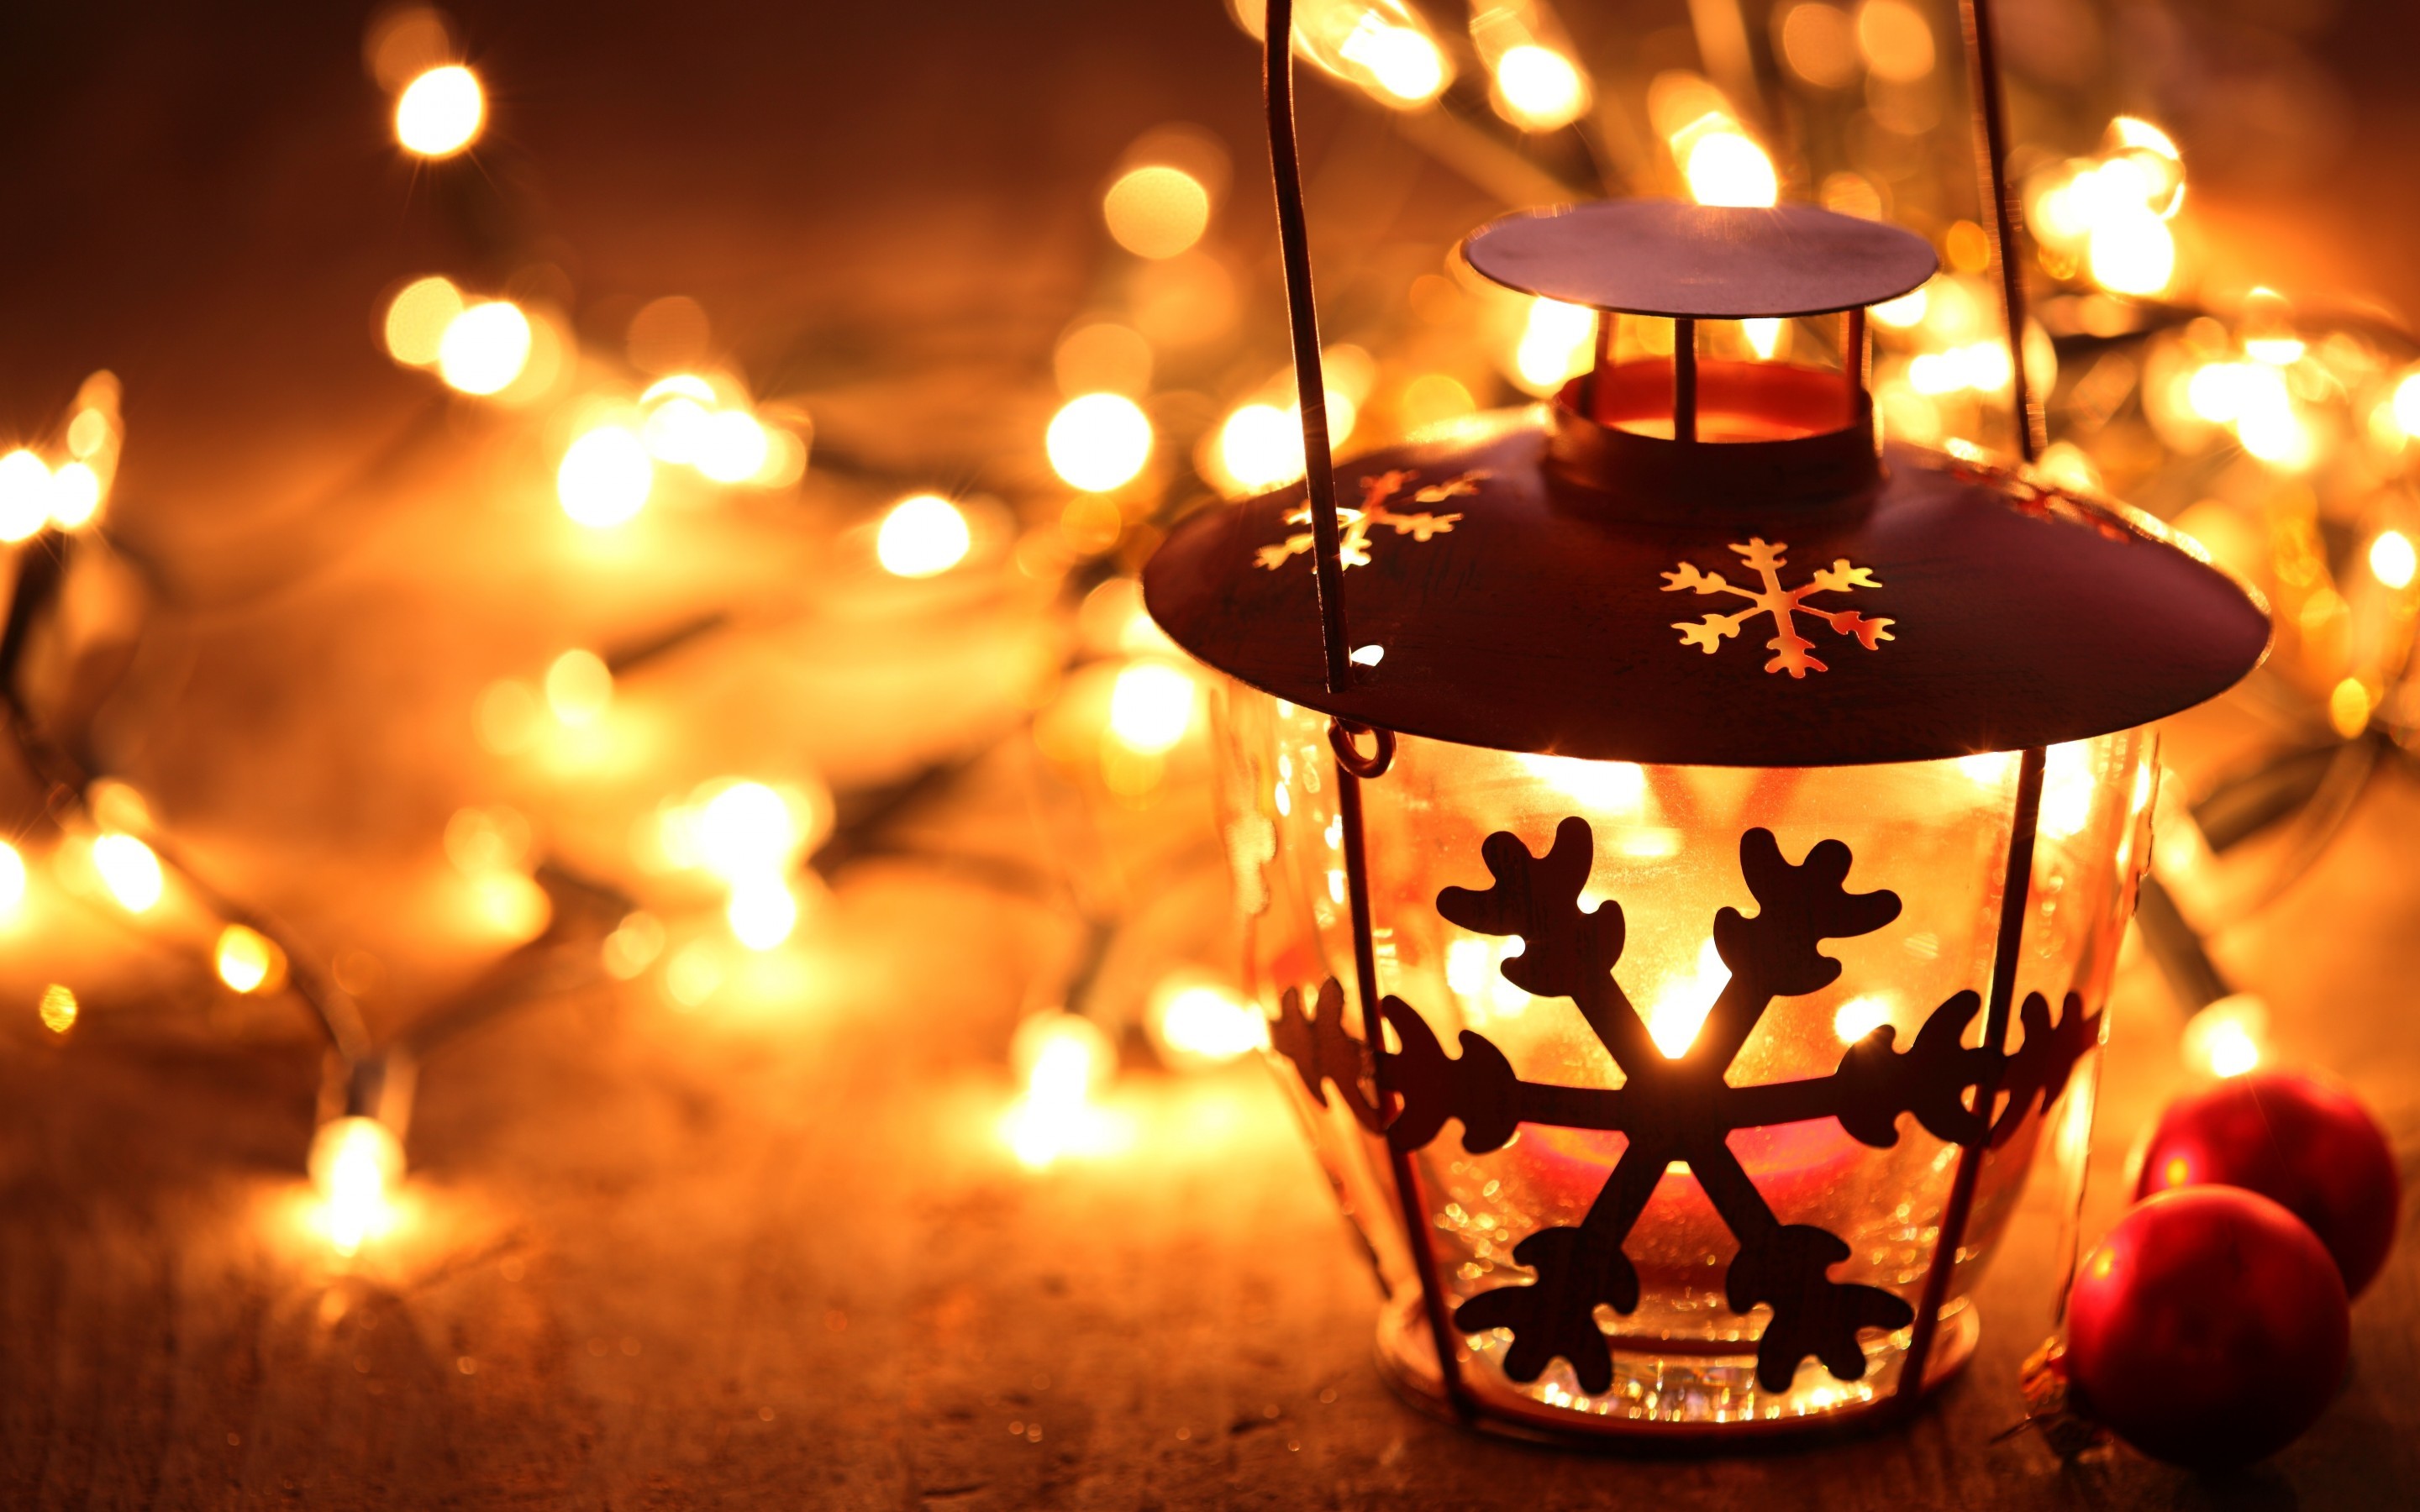 2880x1800, Snowflake Lantern On Wooden Floor With Yellow - Christmas Lights - HD Wallpaper 